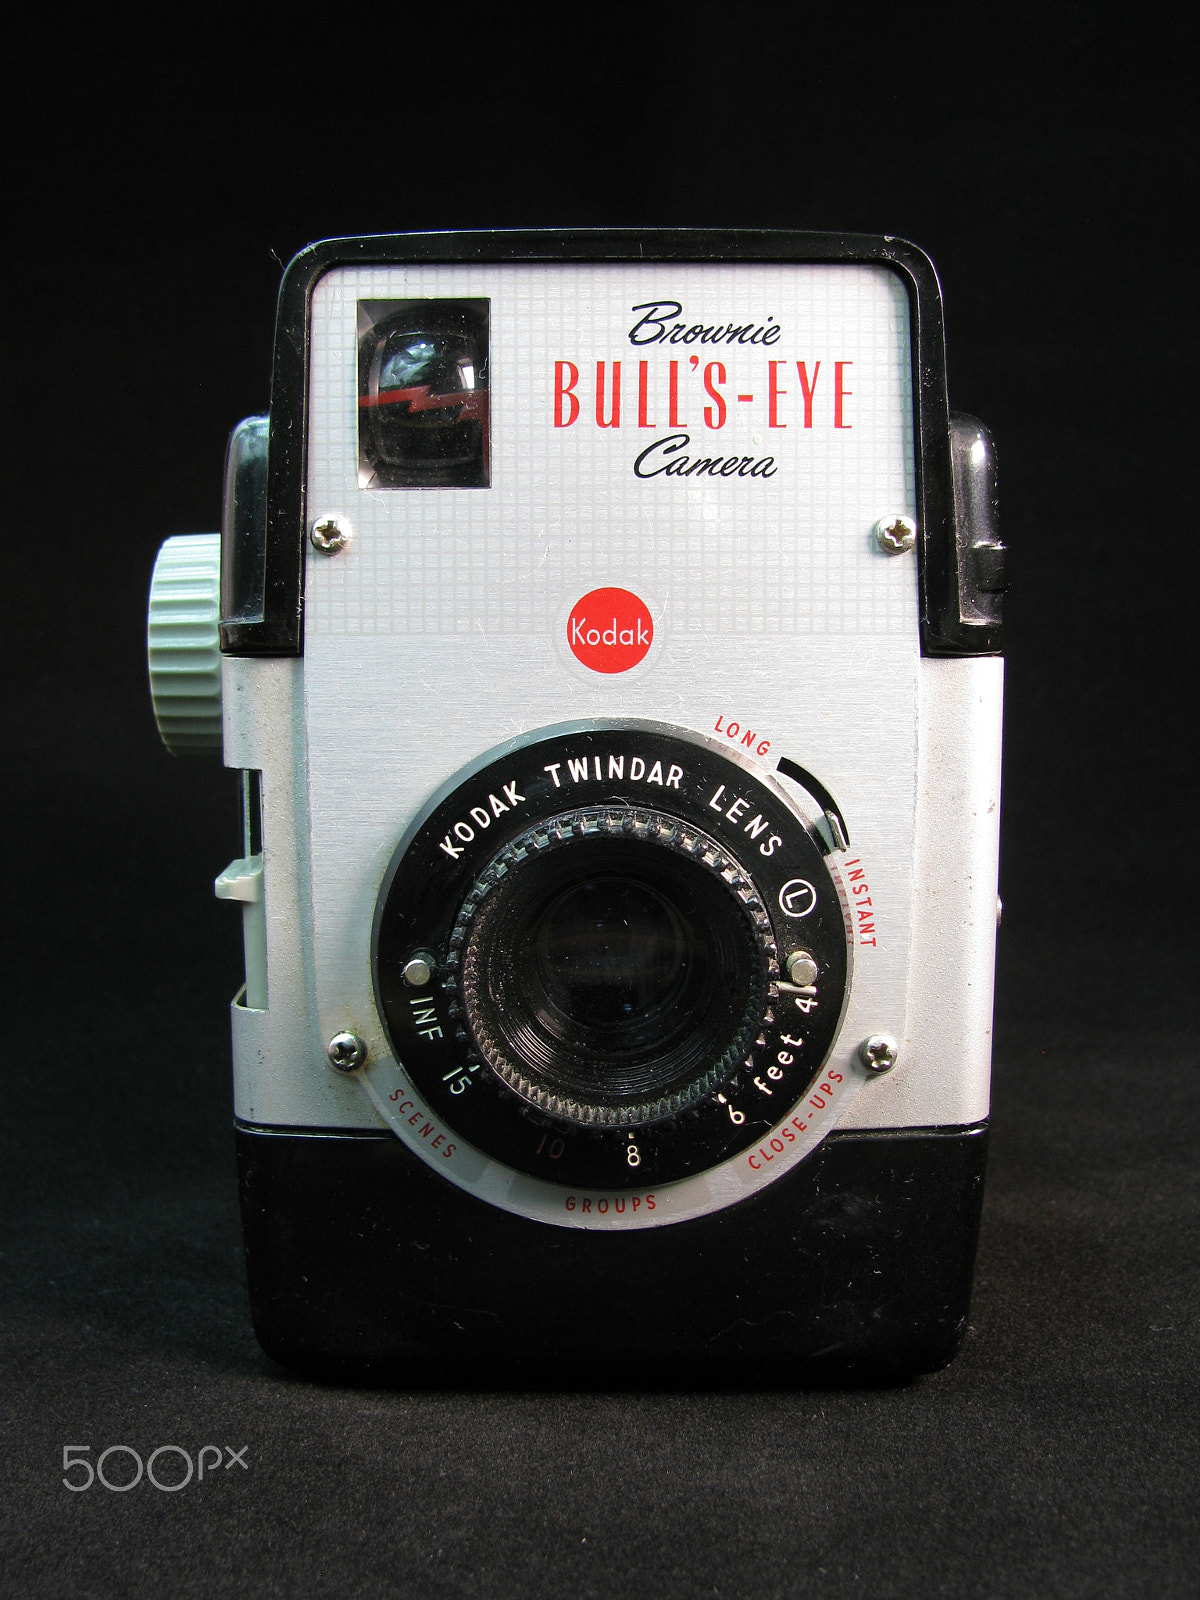 Canon PowerShot SX110 IS sample photo. Kodak brownie bull's-eye film camera photography